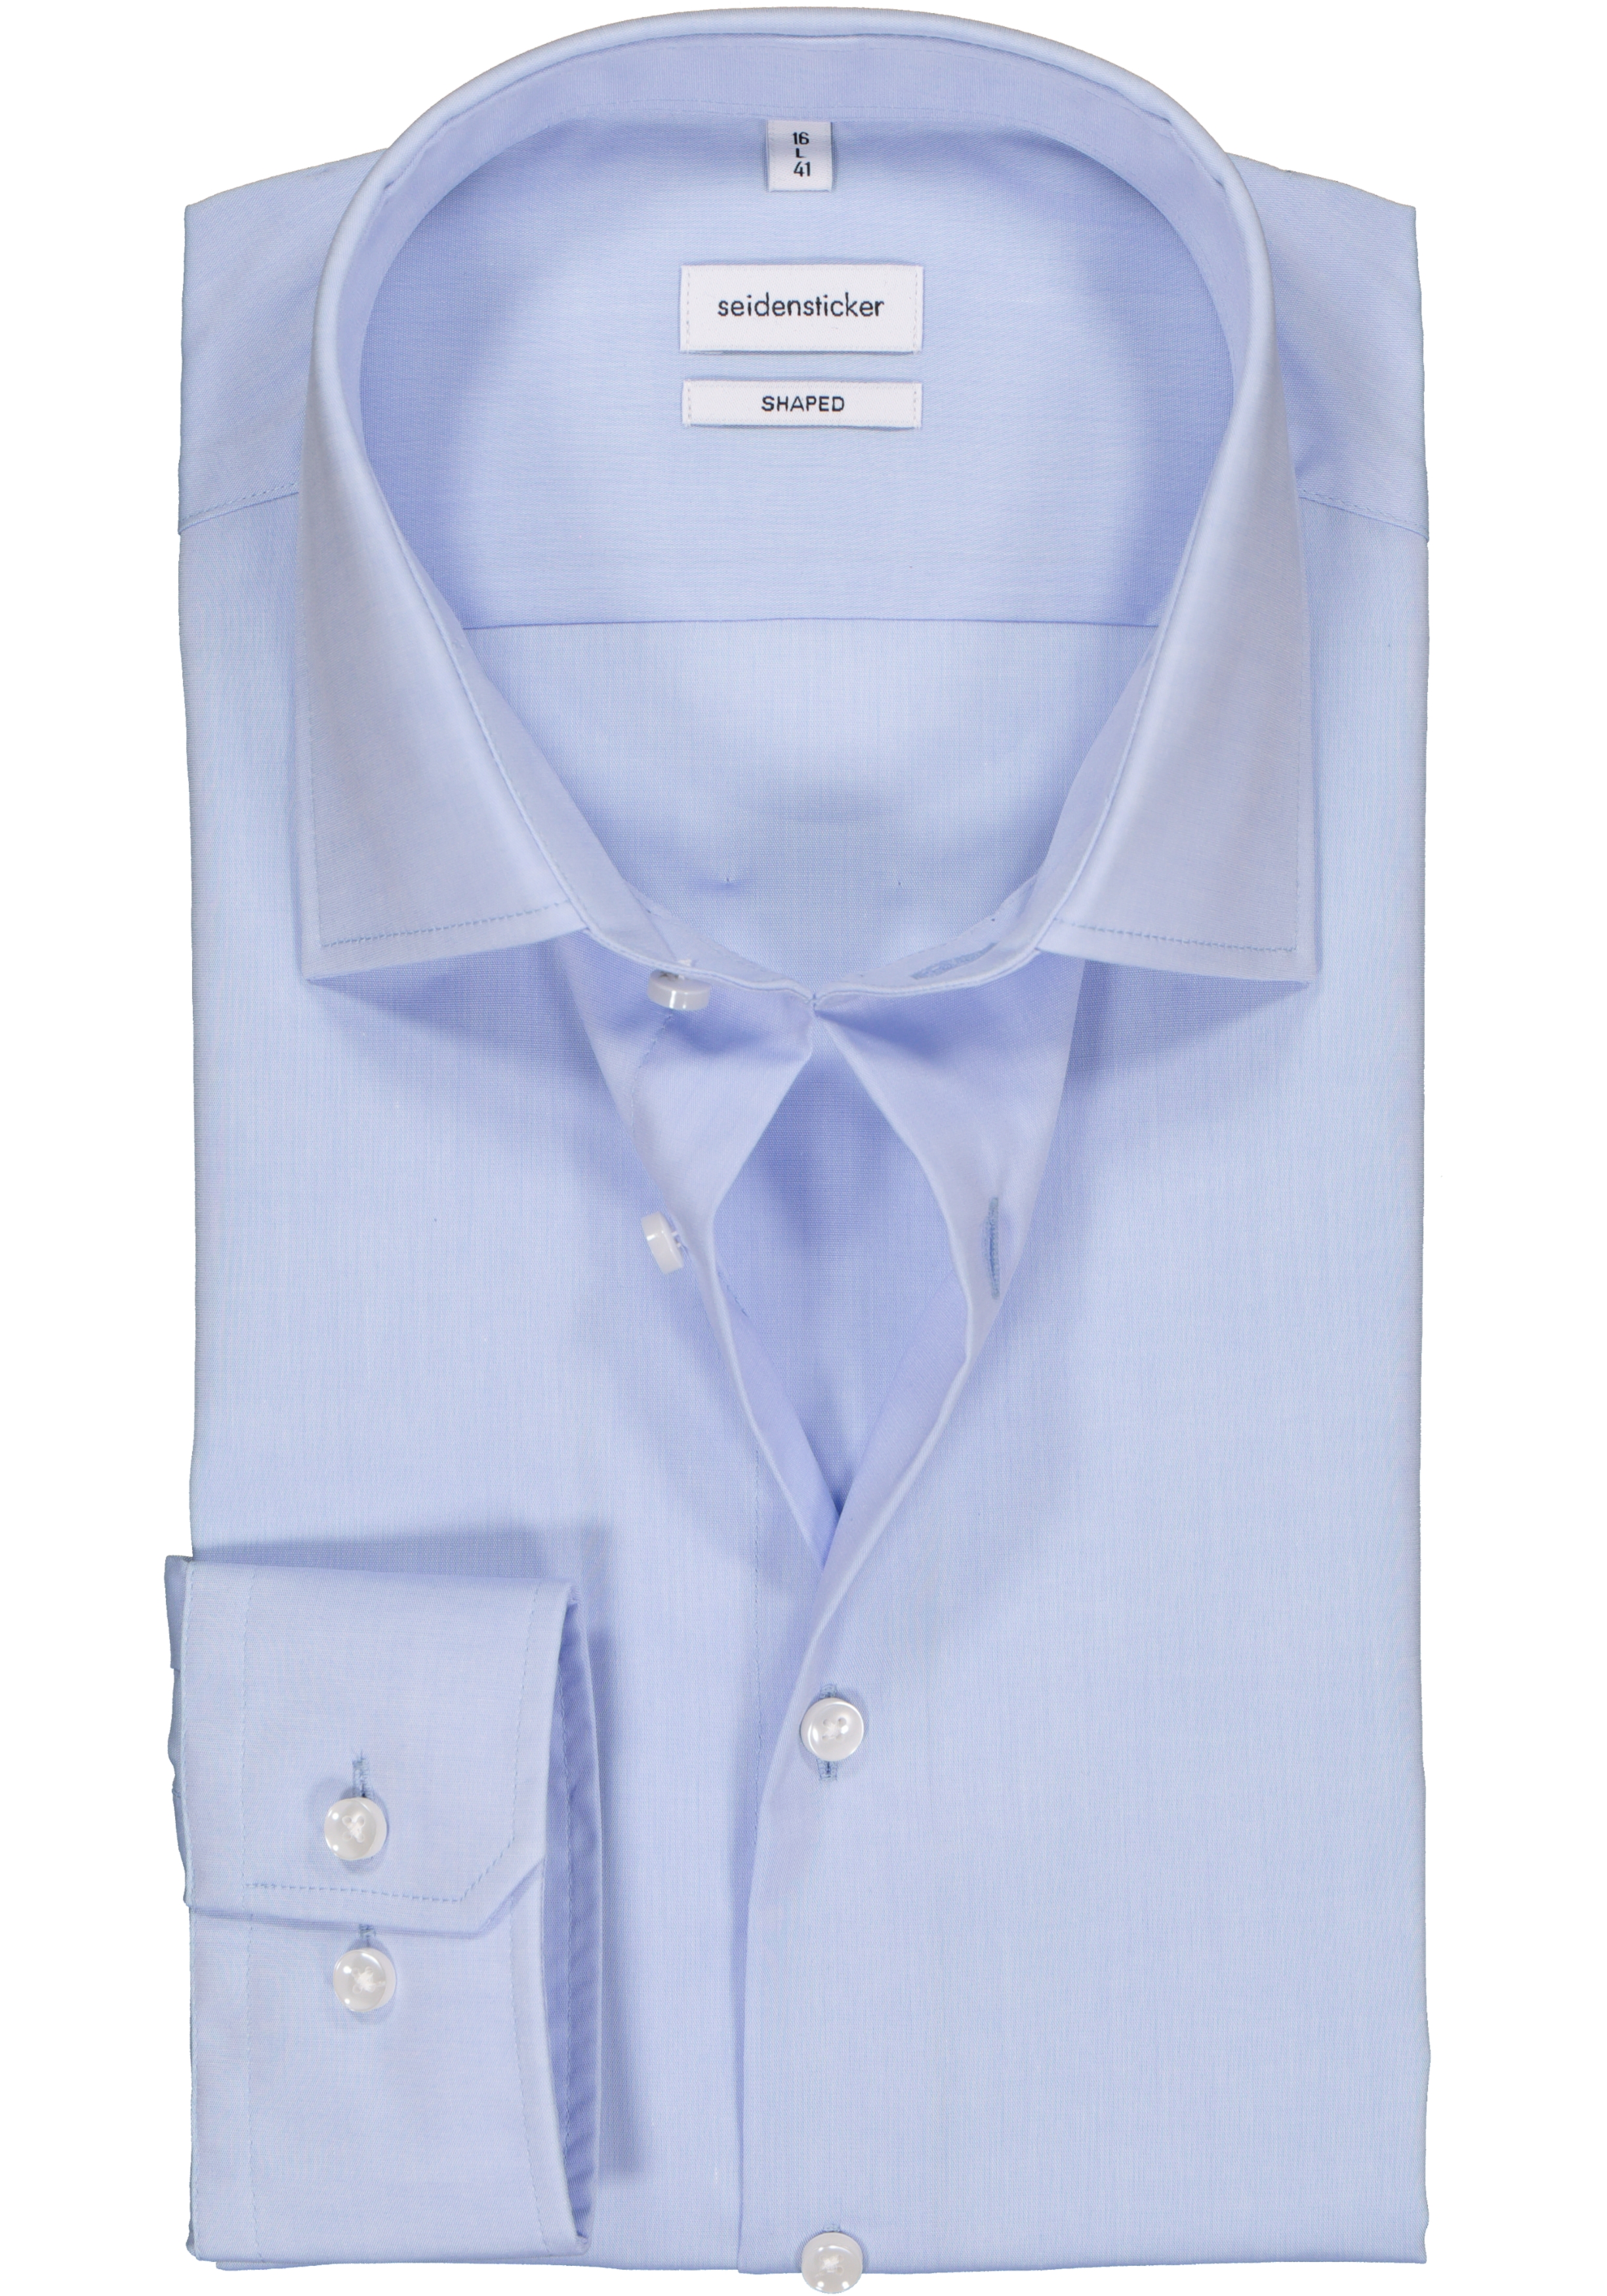 Seidensticker shaped fit overhemd, mouwlengte 7, blauw